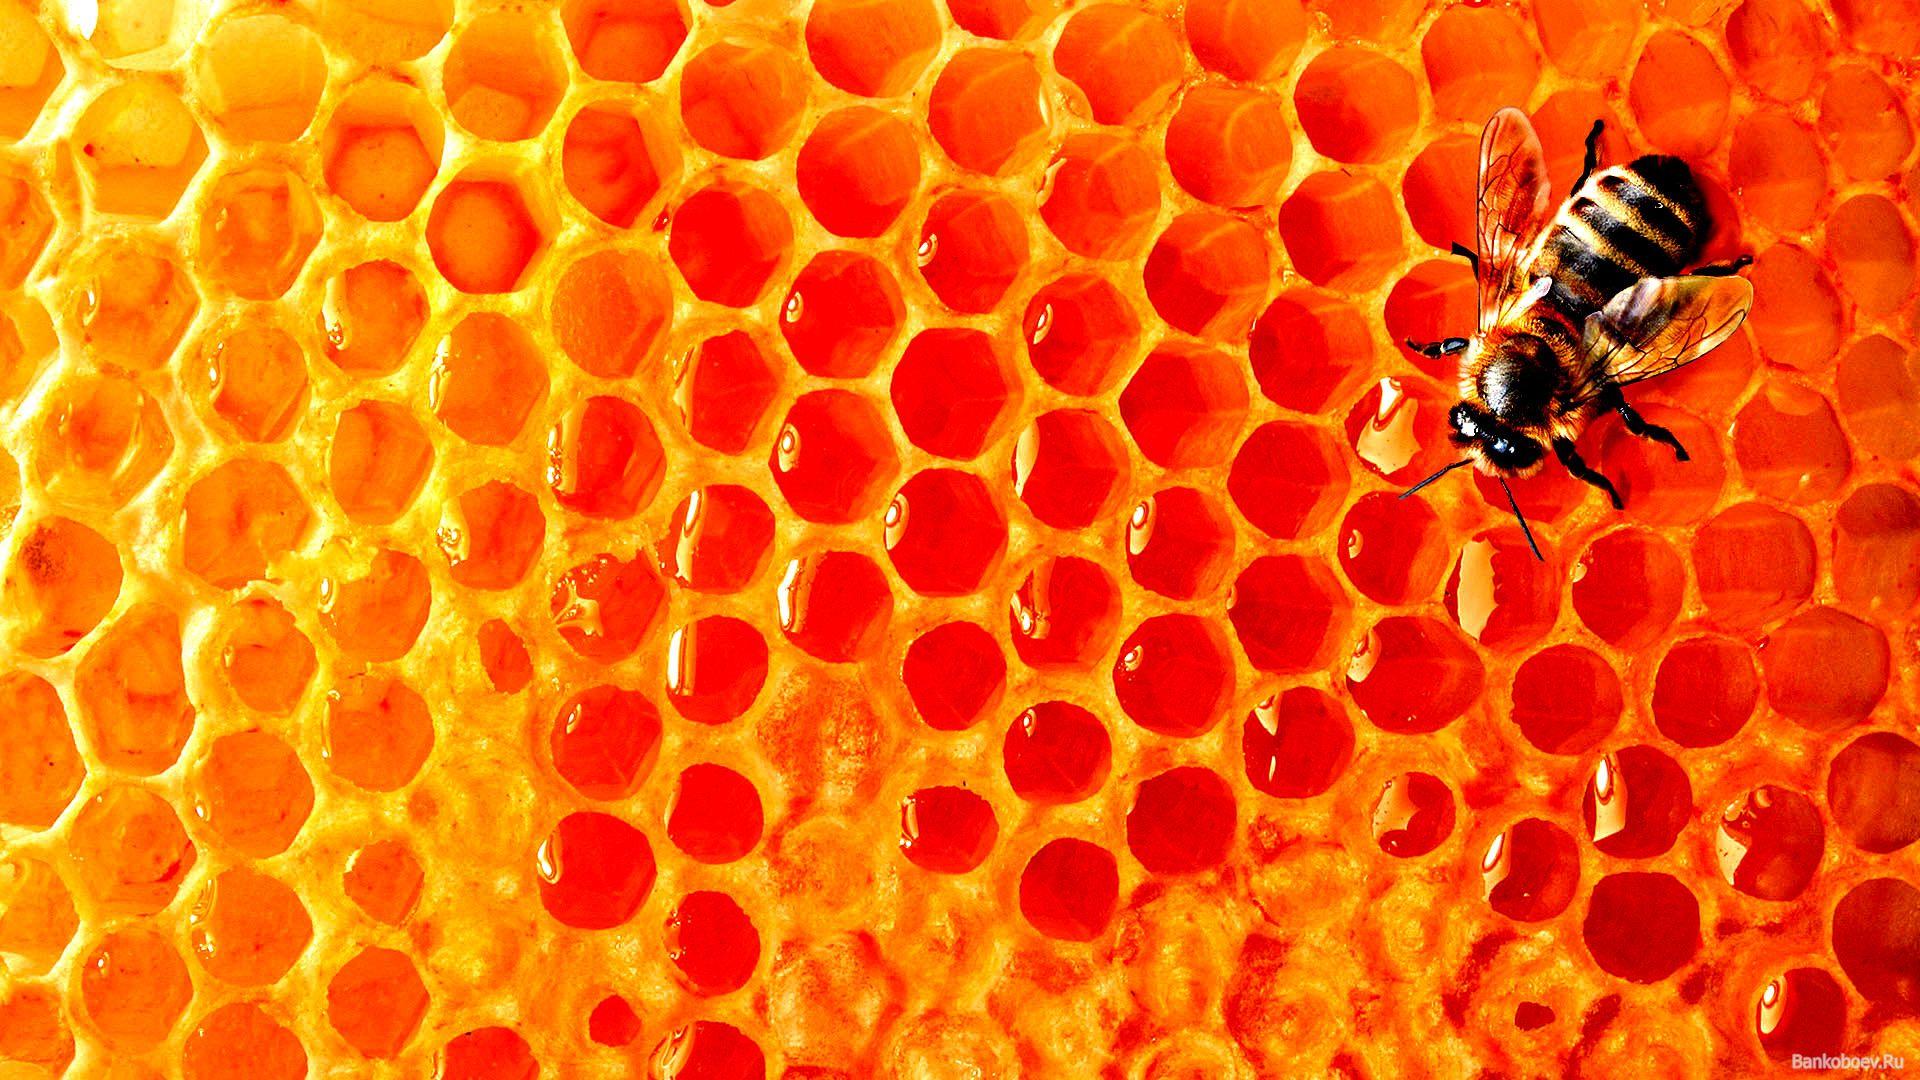 Download wallpaper: bee, Honey, honey honeycomb, download photo, wallpaper for desktop. Пчеловодство, Обои для компьютера, Мед